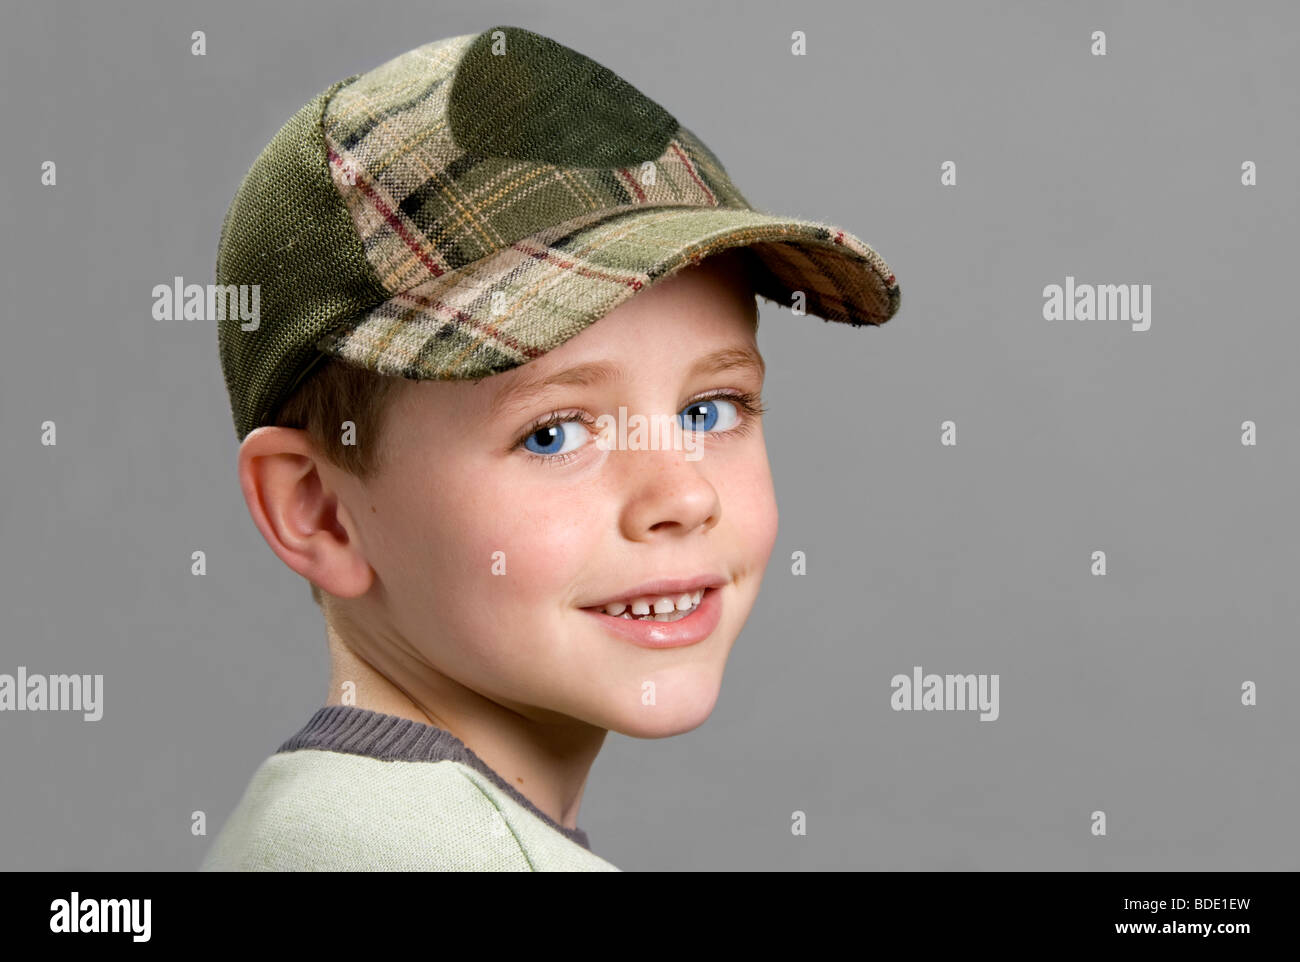 young junior boy wearing baseball cap Stock Photo